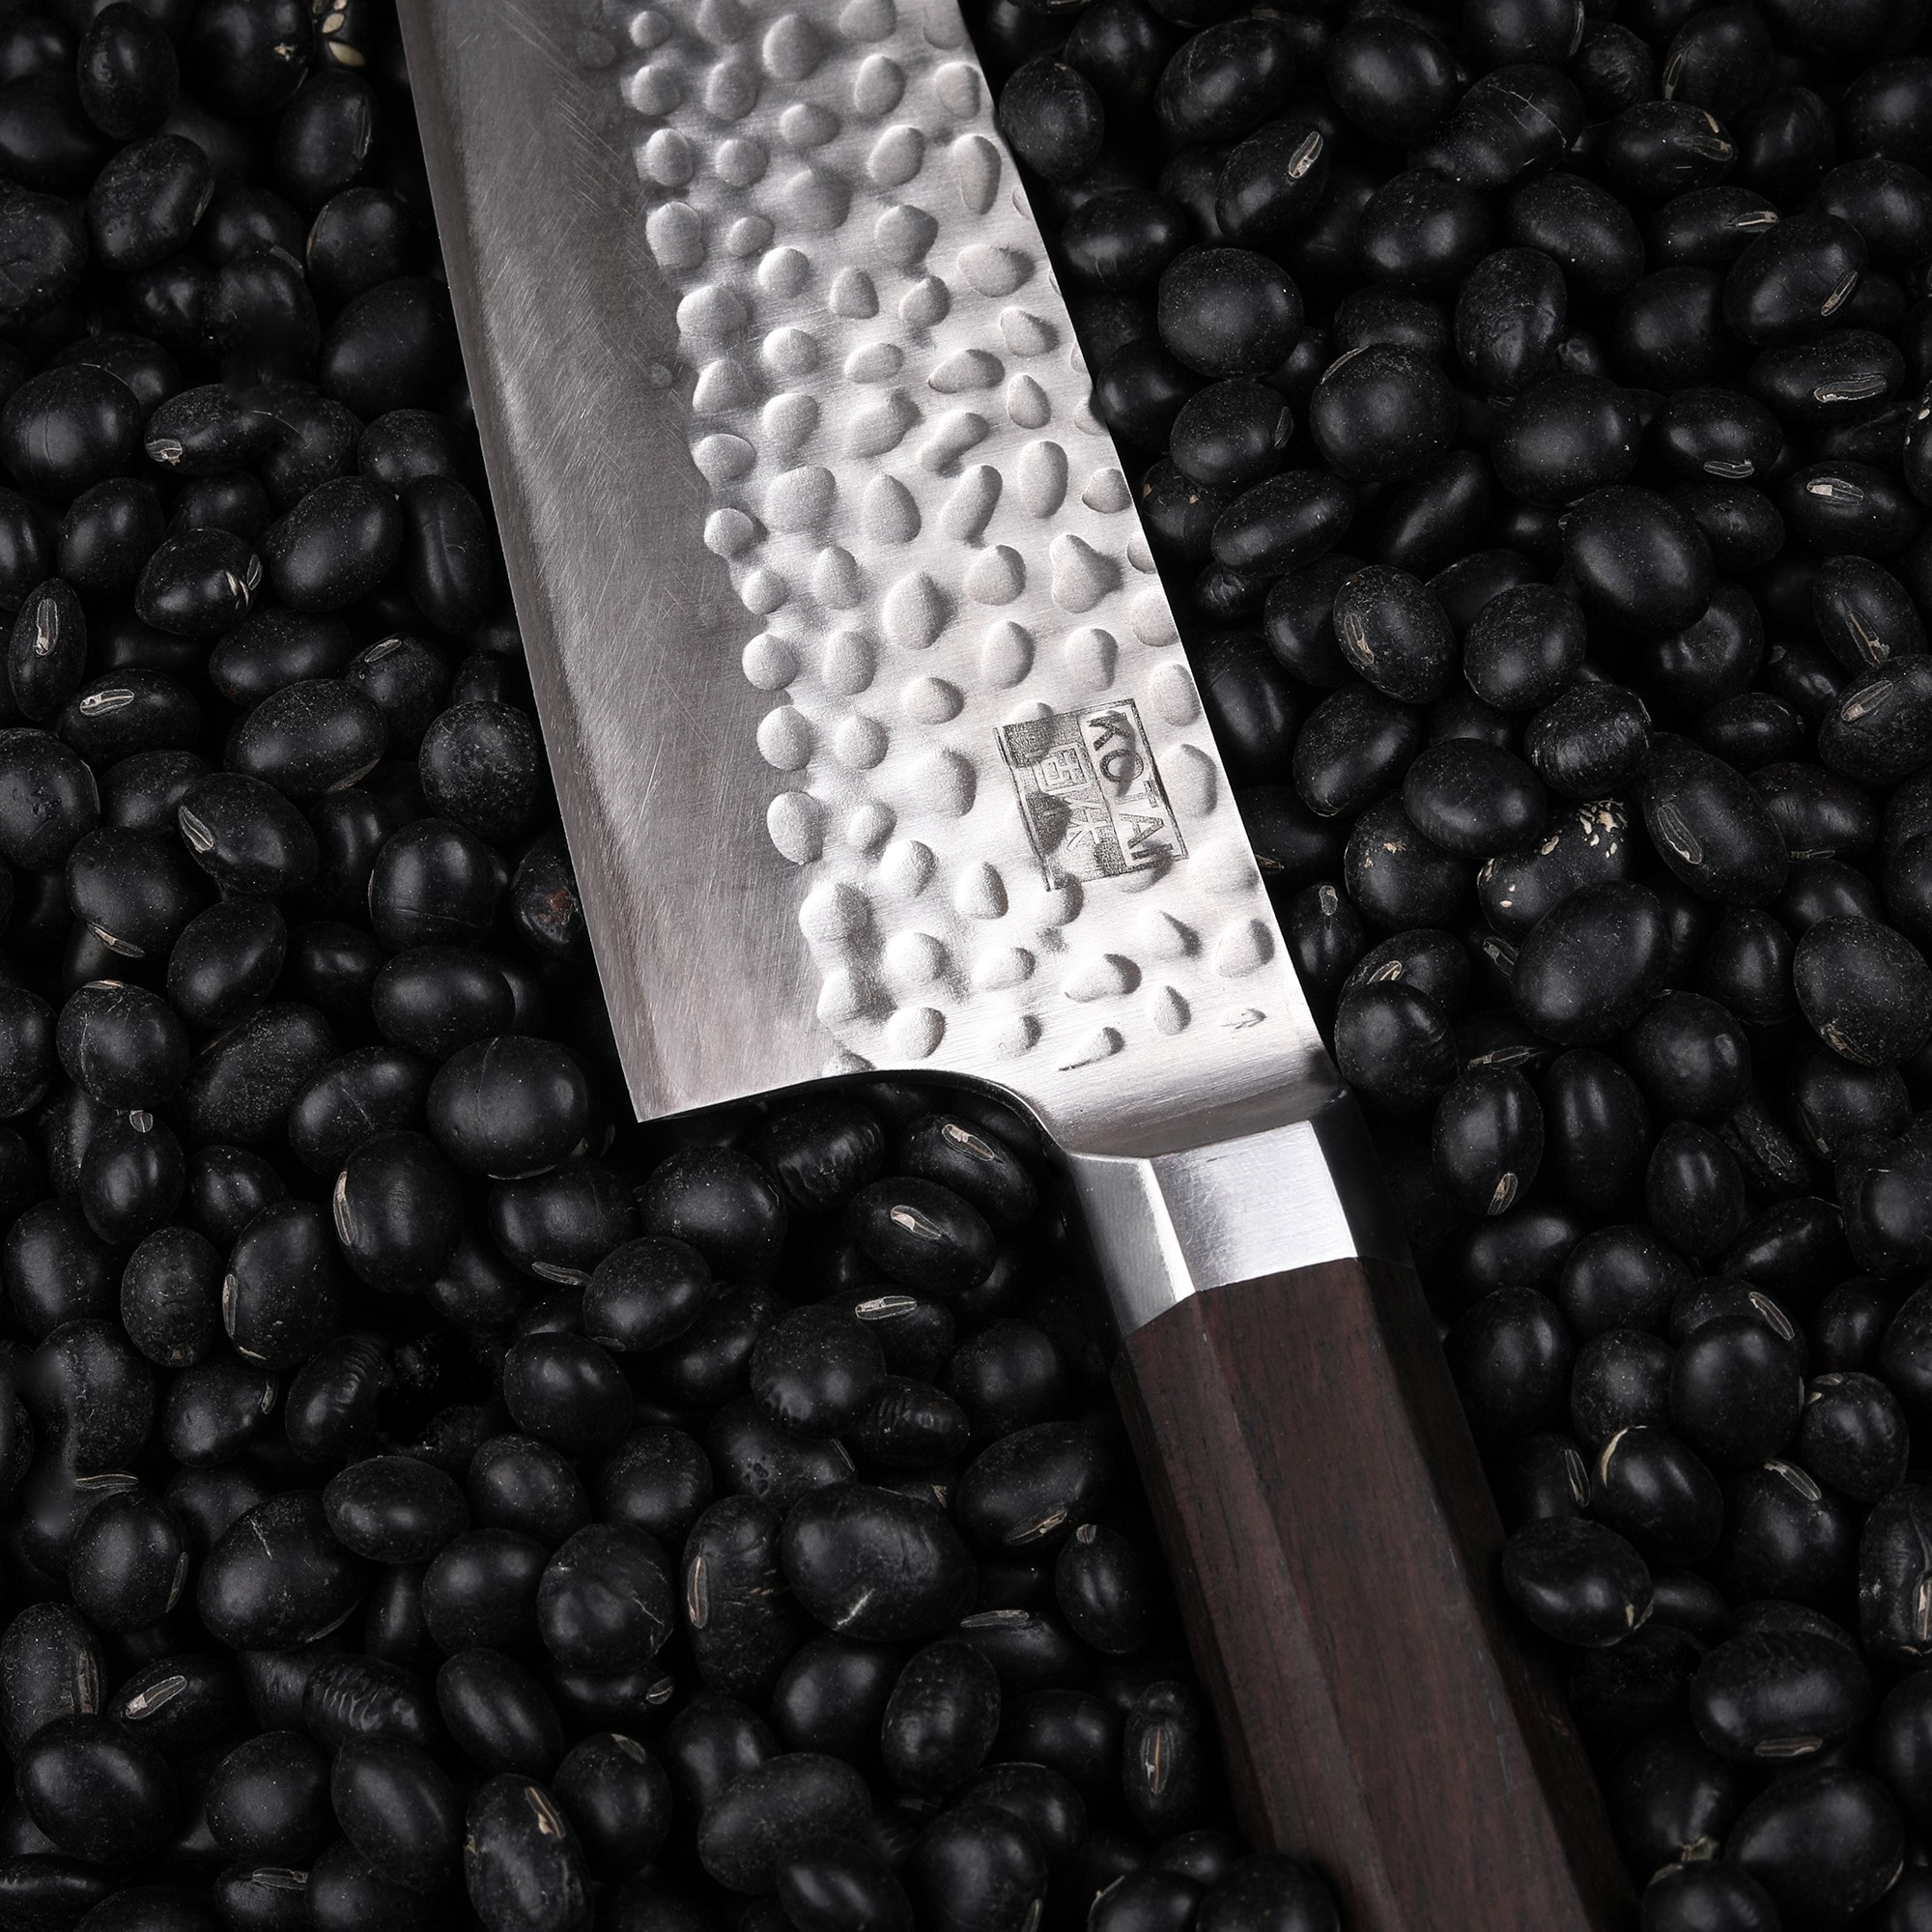 Couteau de cuisine KOTAI KIRITSUKE KOTAI Lame 21cm KT-SG-001B Pas Cher 